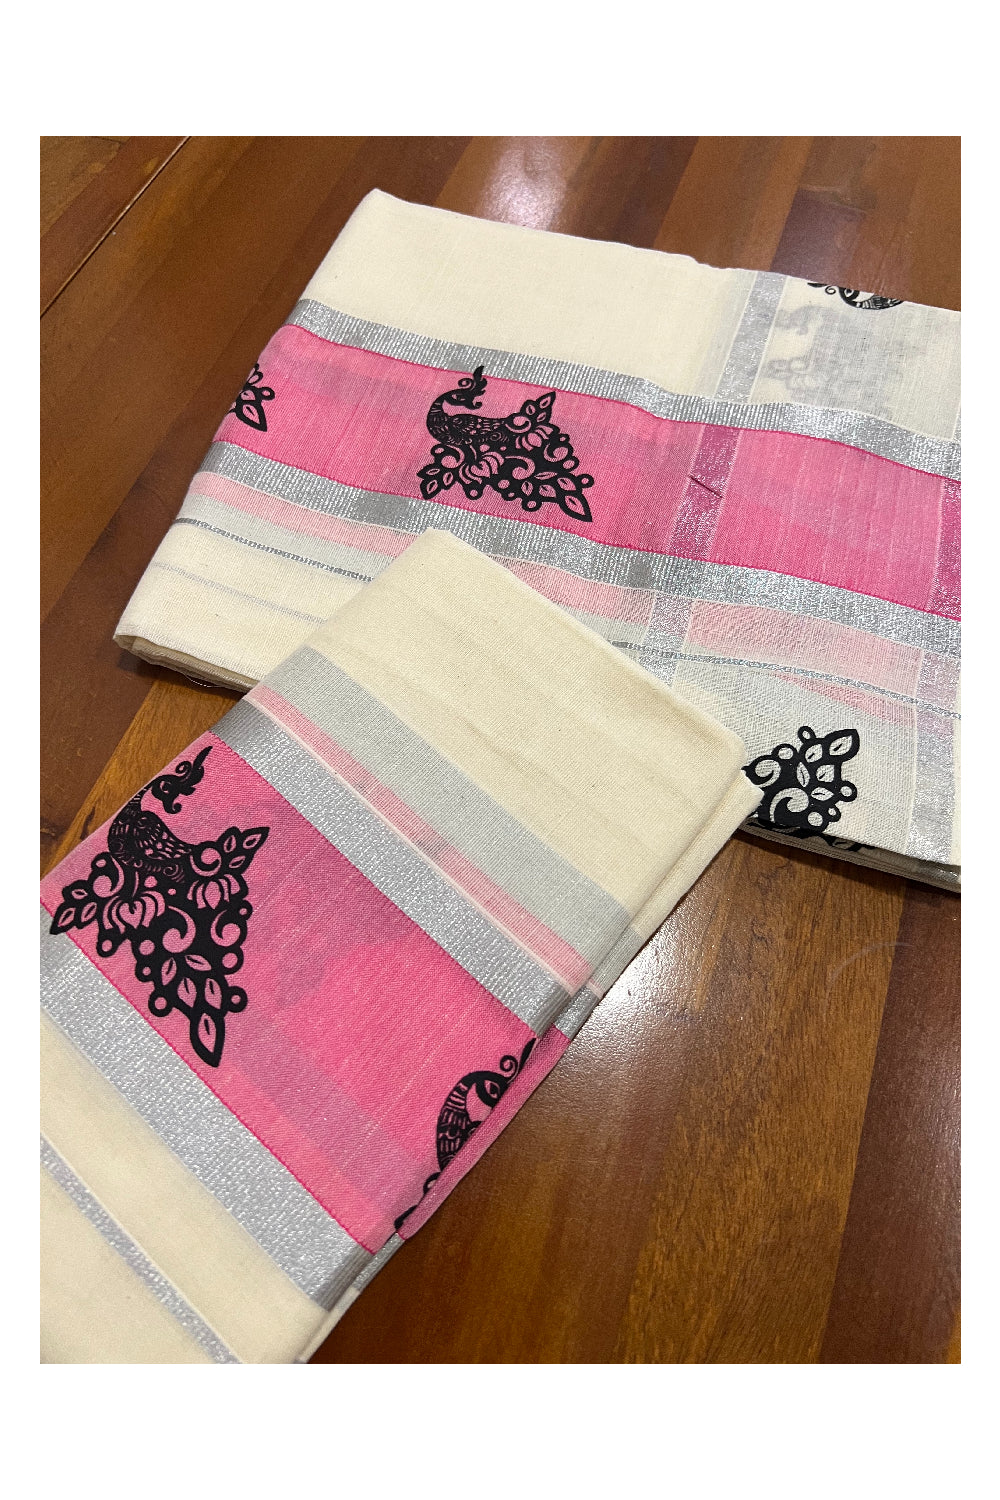 Kerala Cotton Set Mundu (Mundum Neriyathum) with Silver Kasavu and Black Block Prints on Pink Border